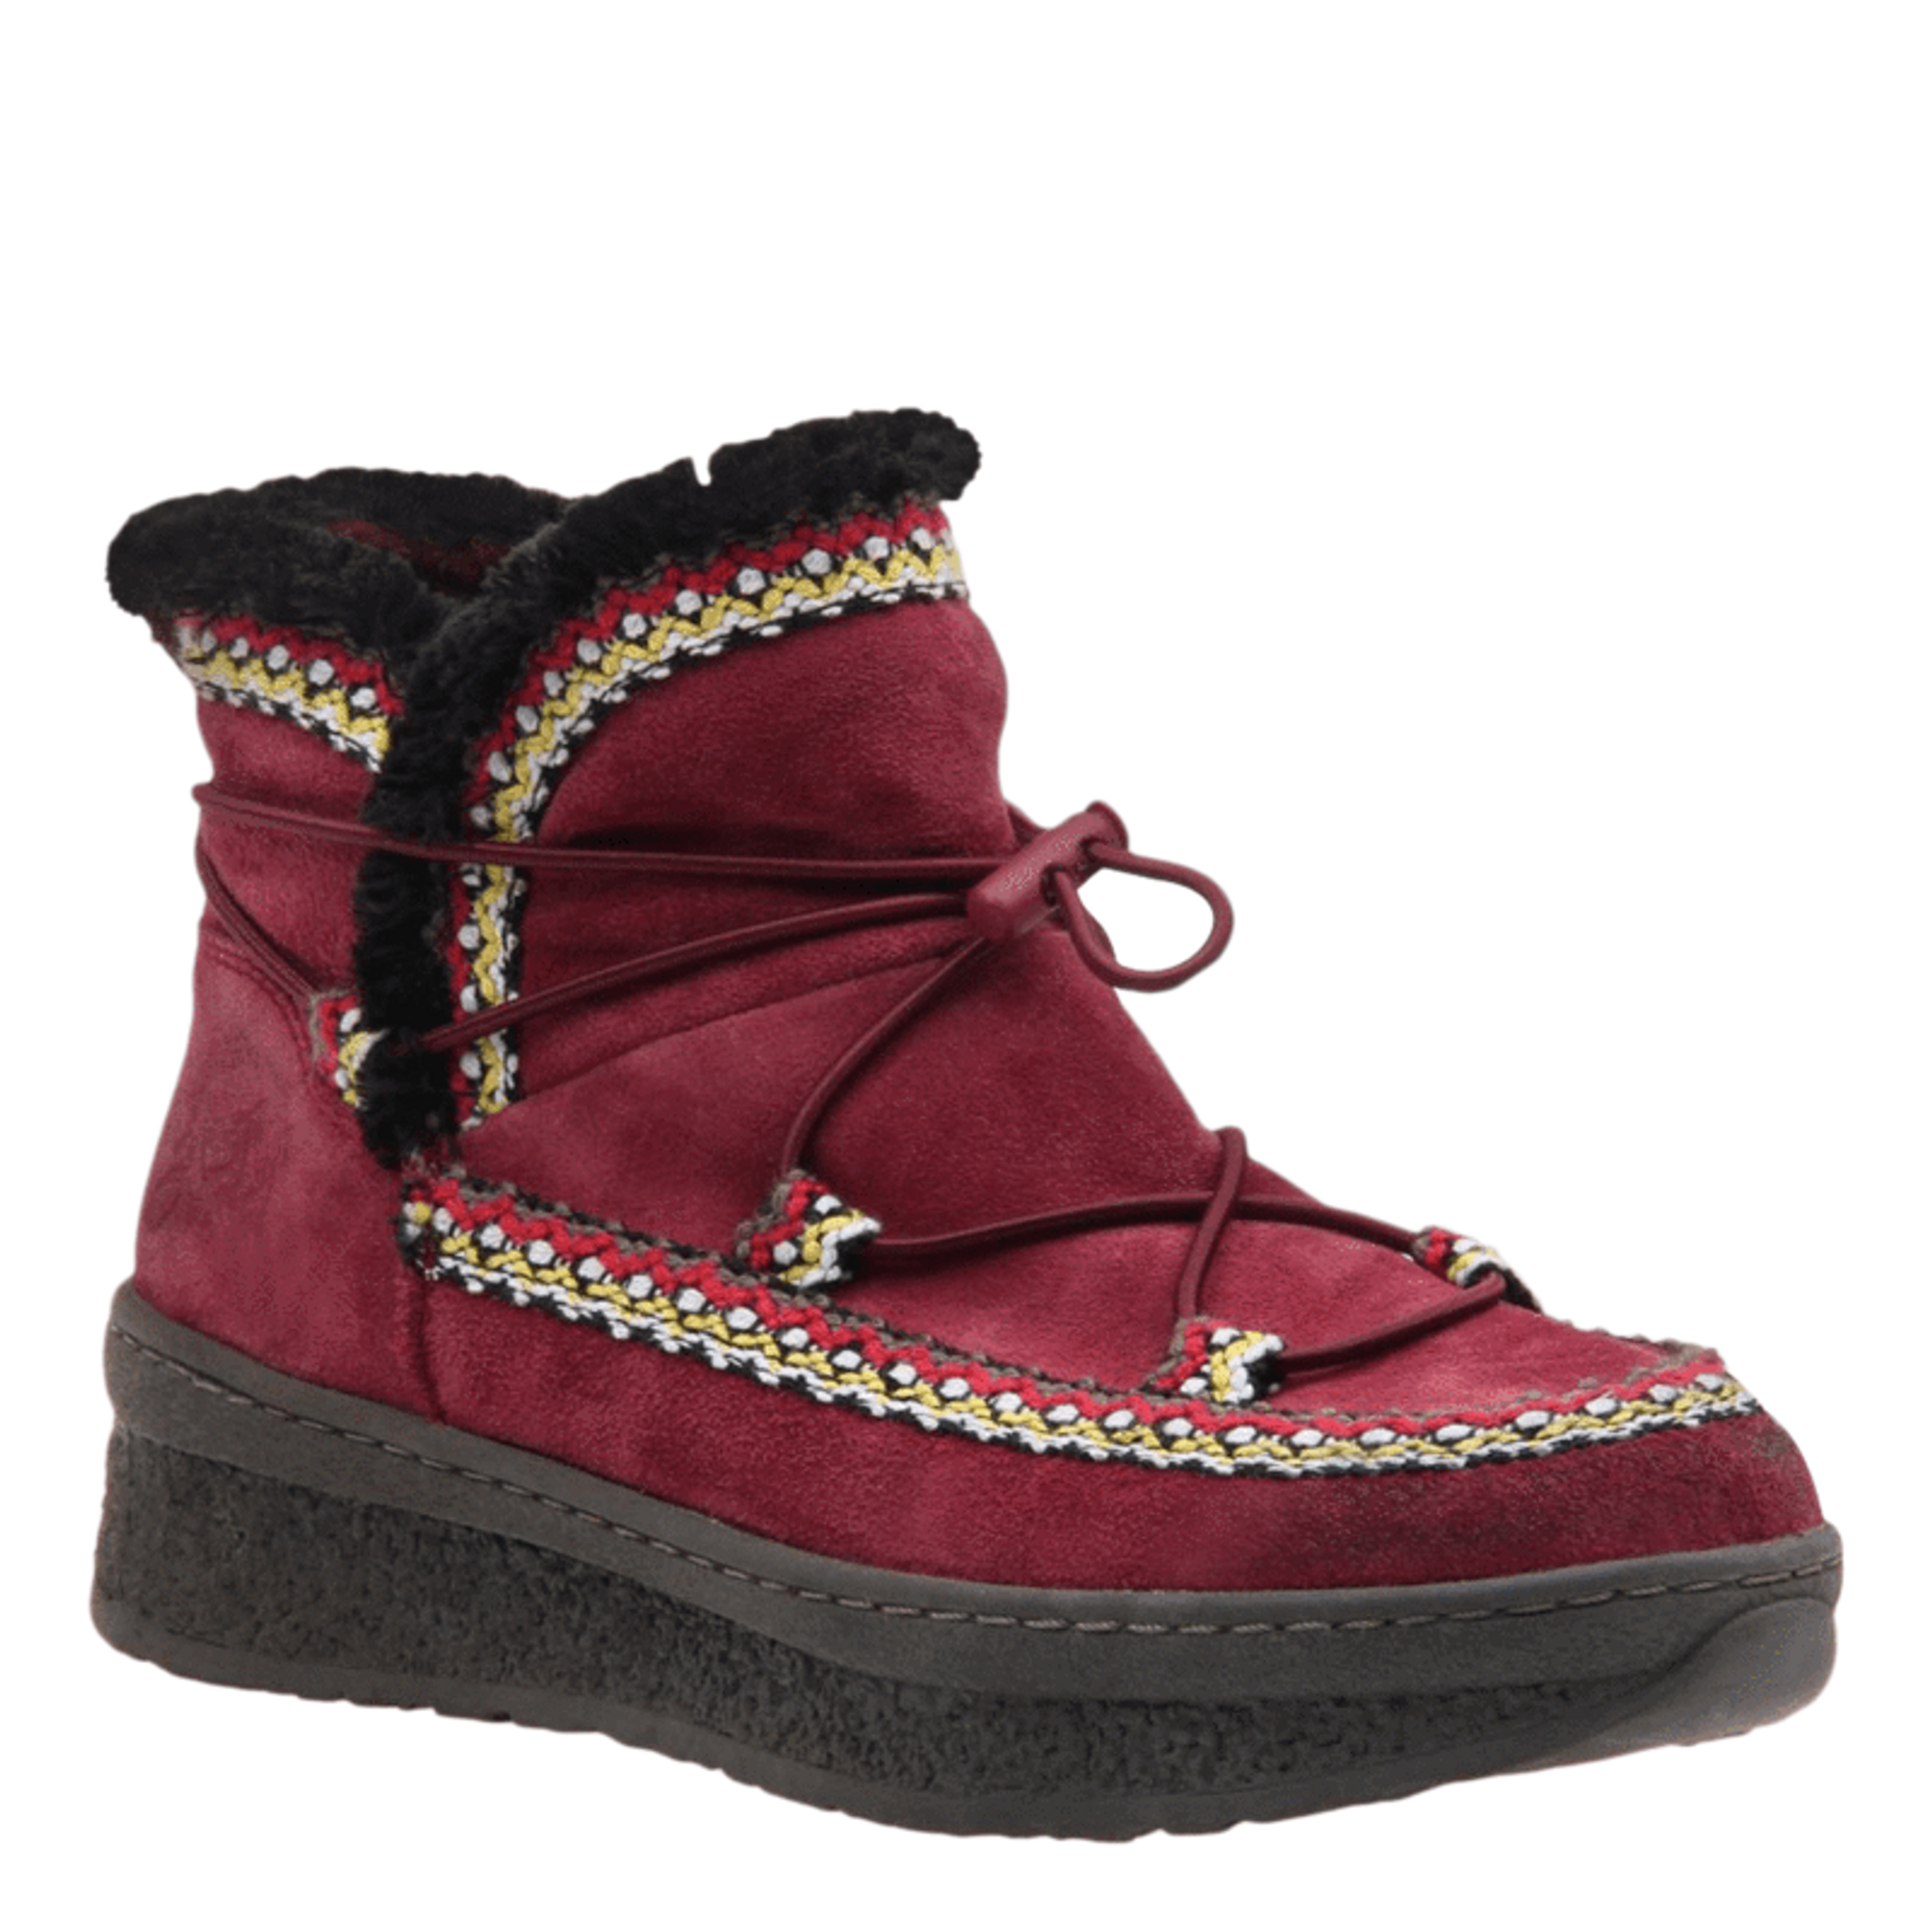 eskimo style boots